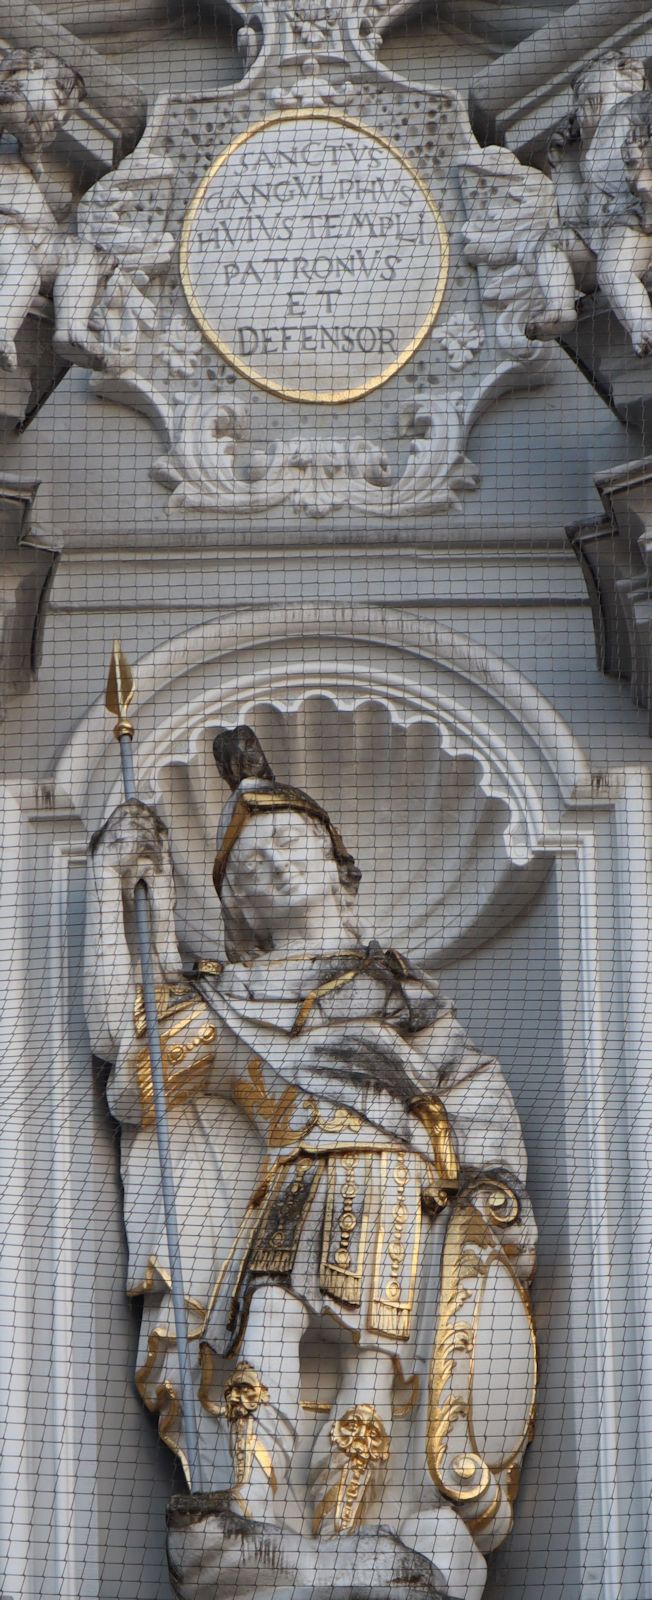 Statue am Eingang zur Kirche St. Gangolf in Trier